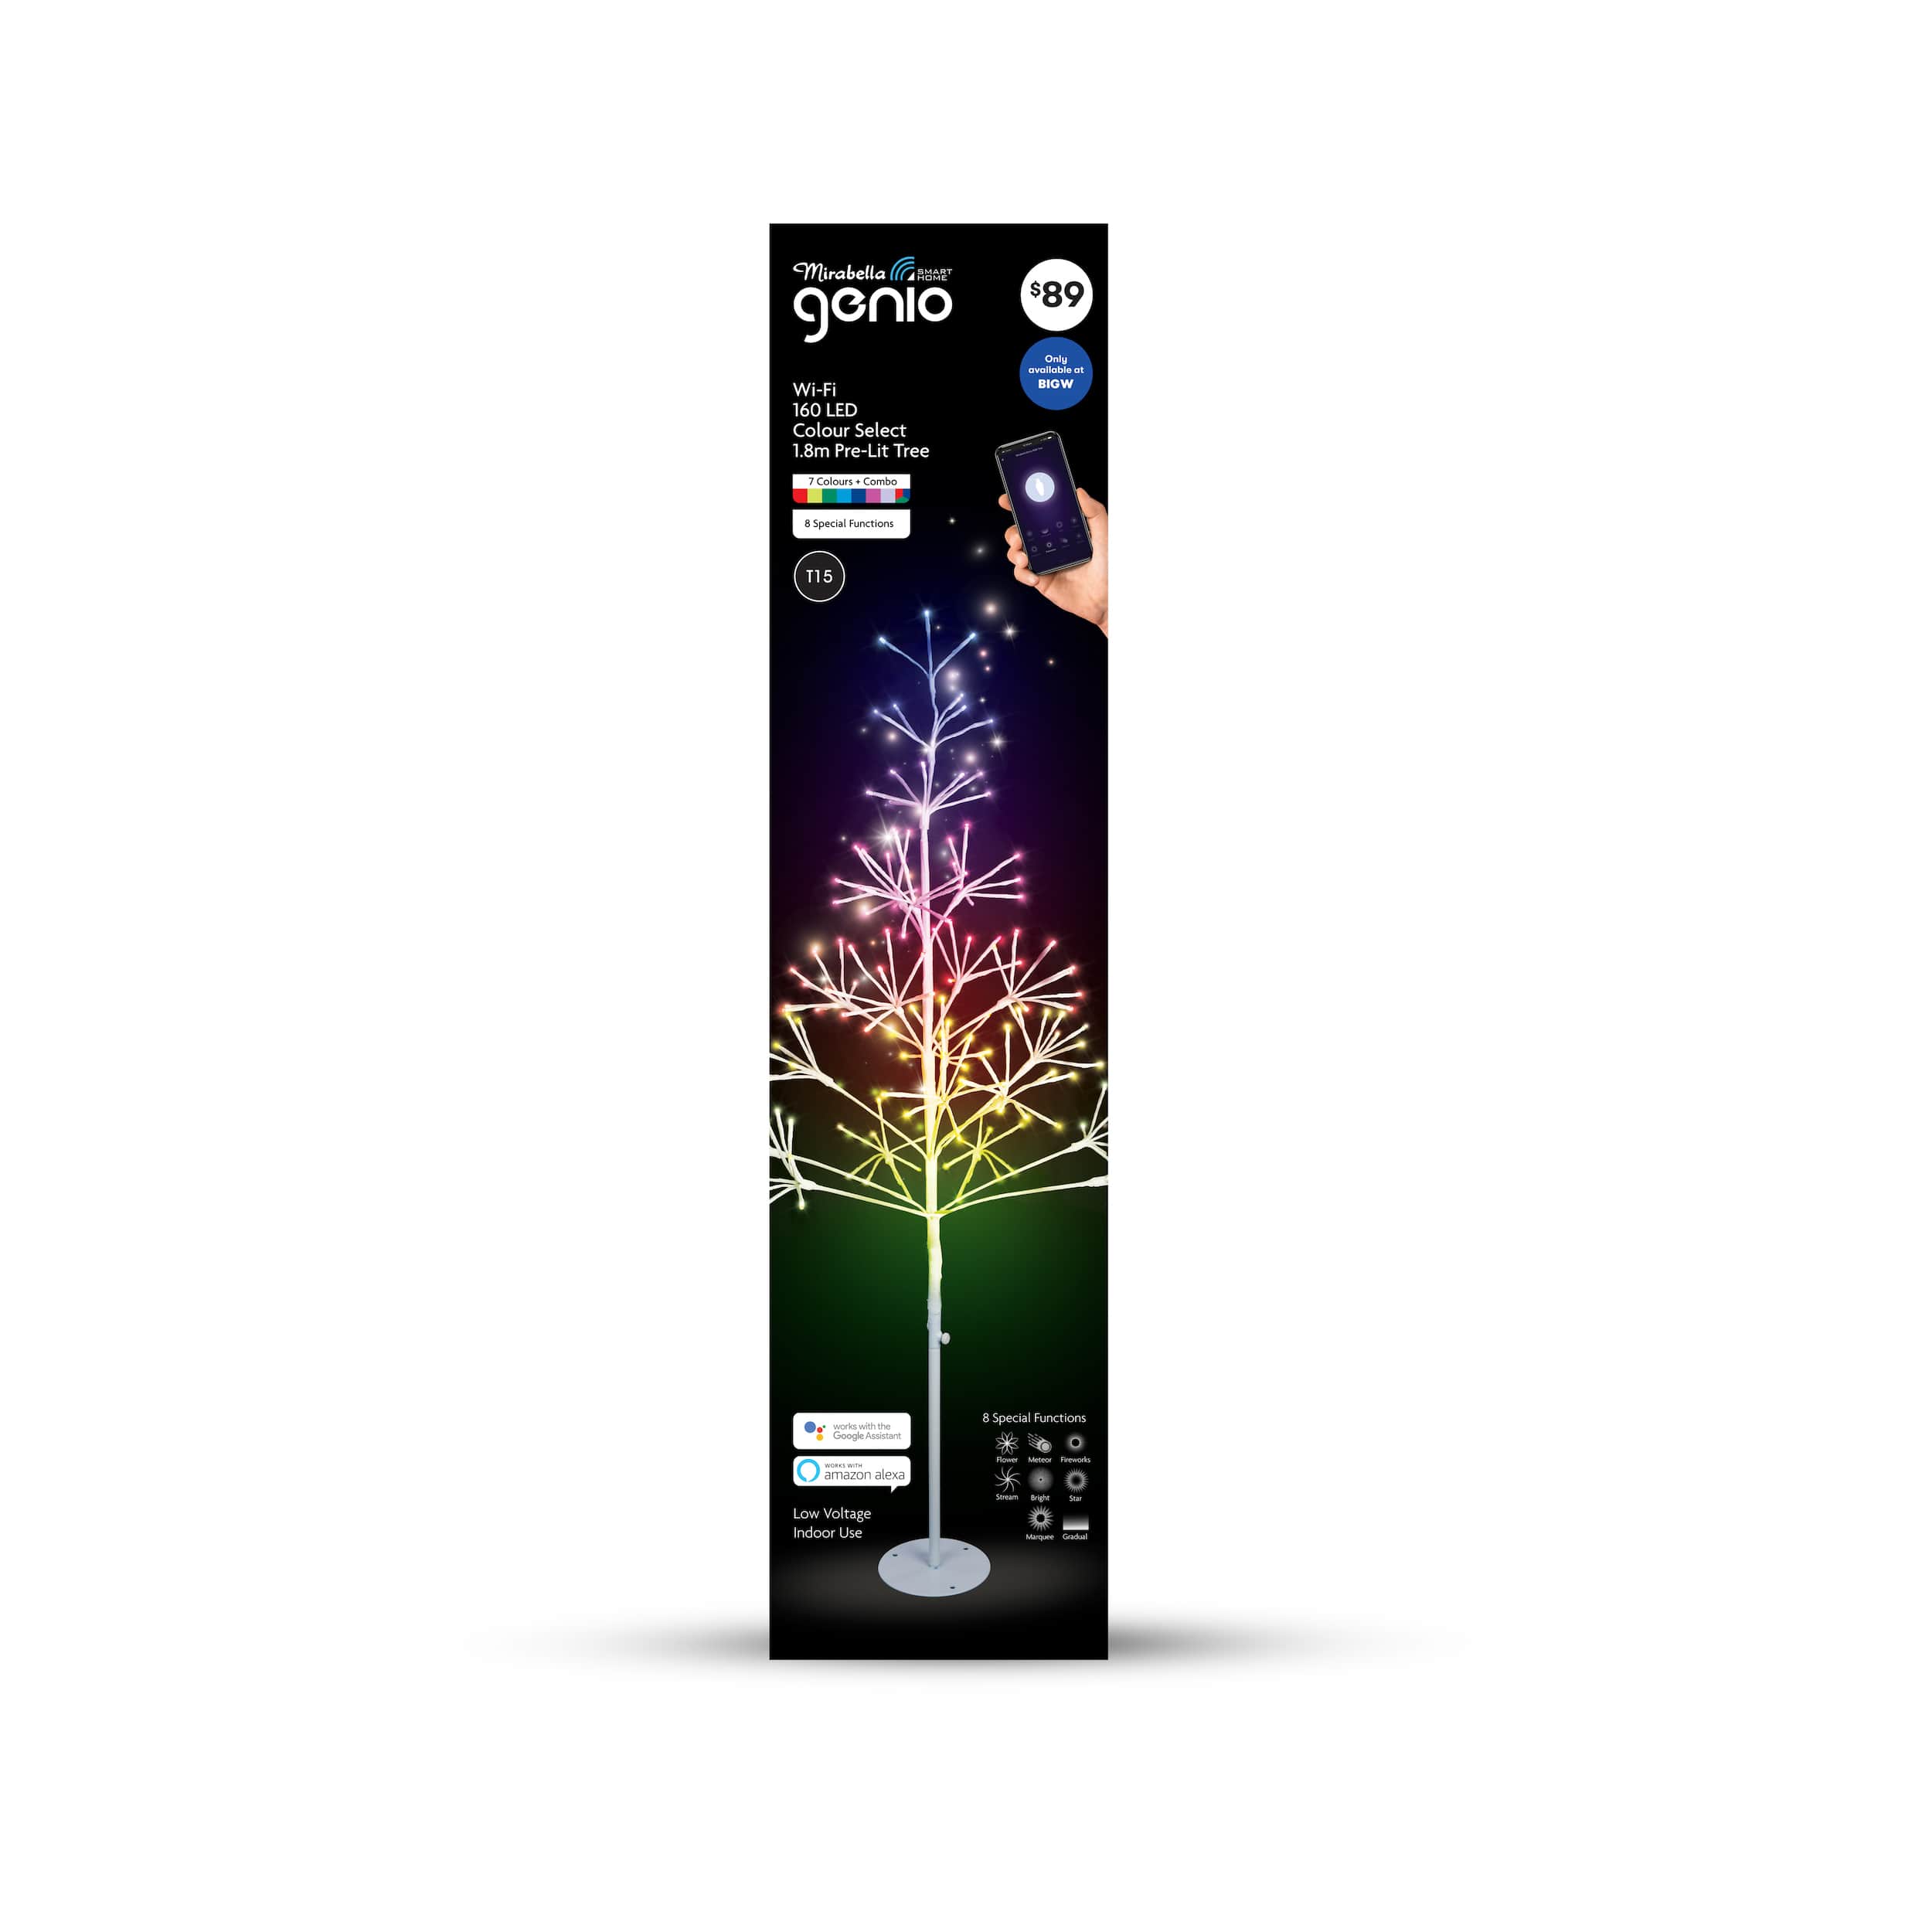 Mirabella Genio Wi-Fi 160 LED Colour Select 1.8m Pre Lit Tree